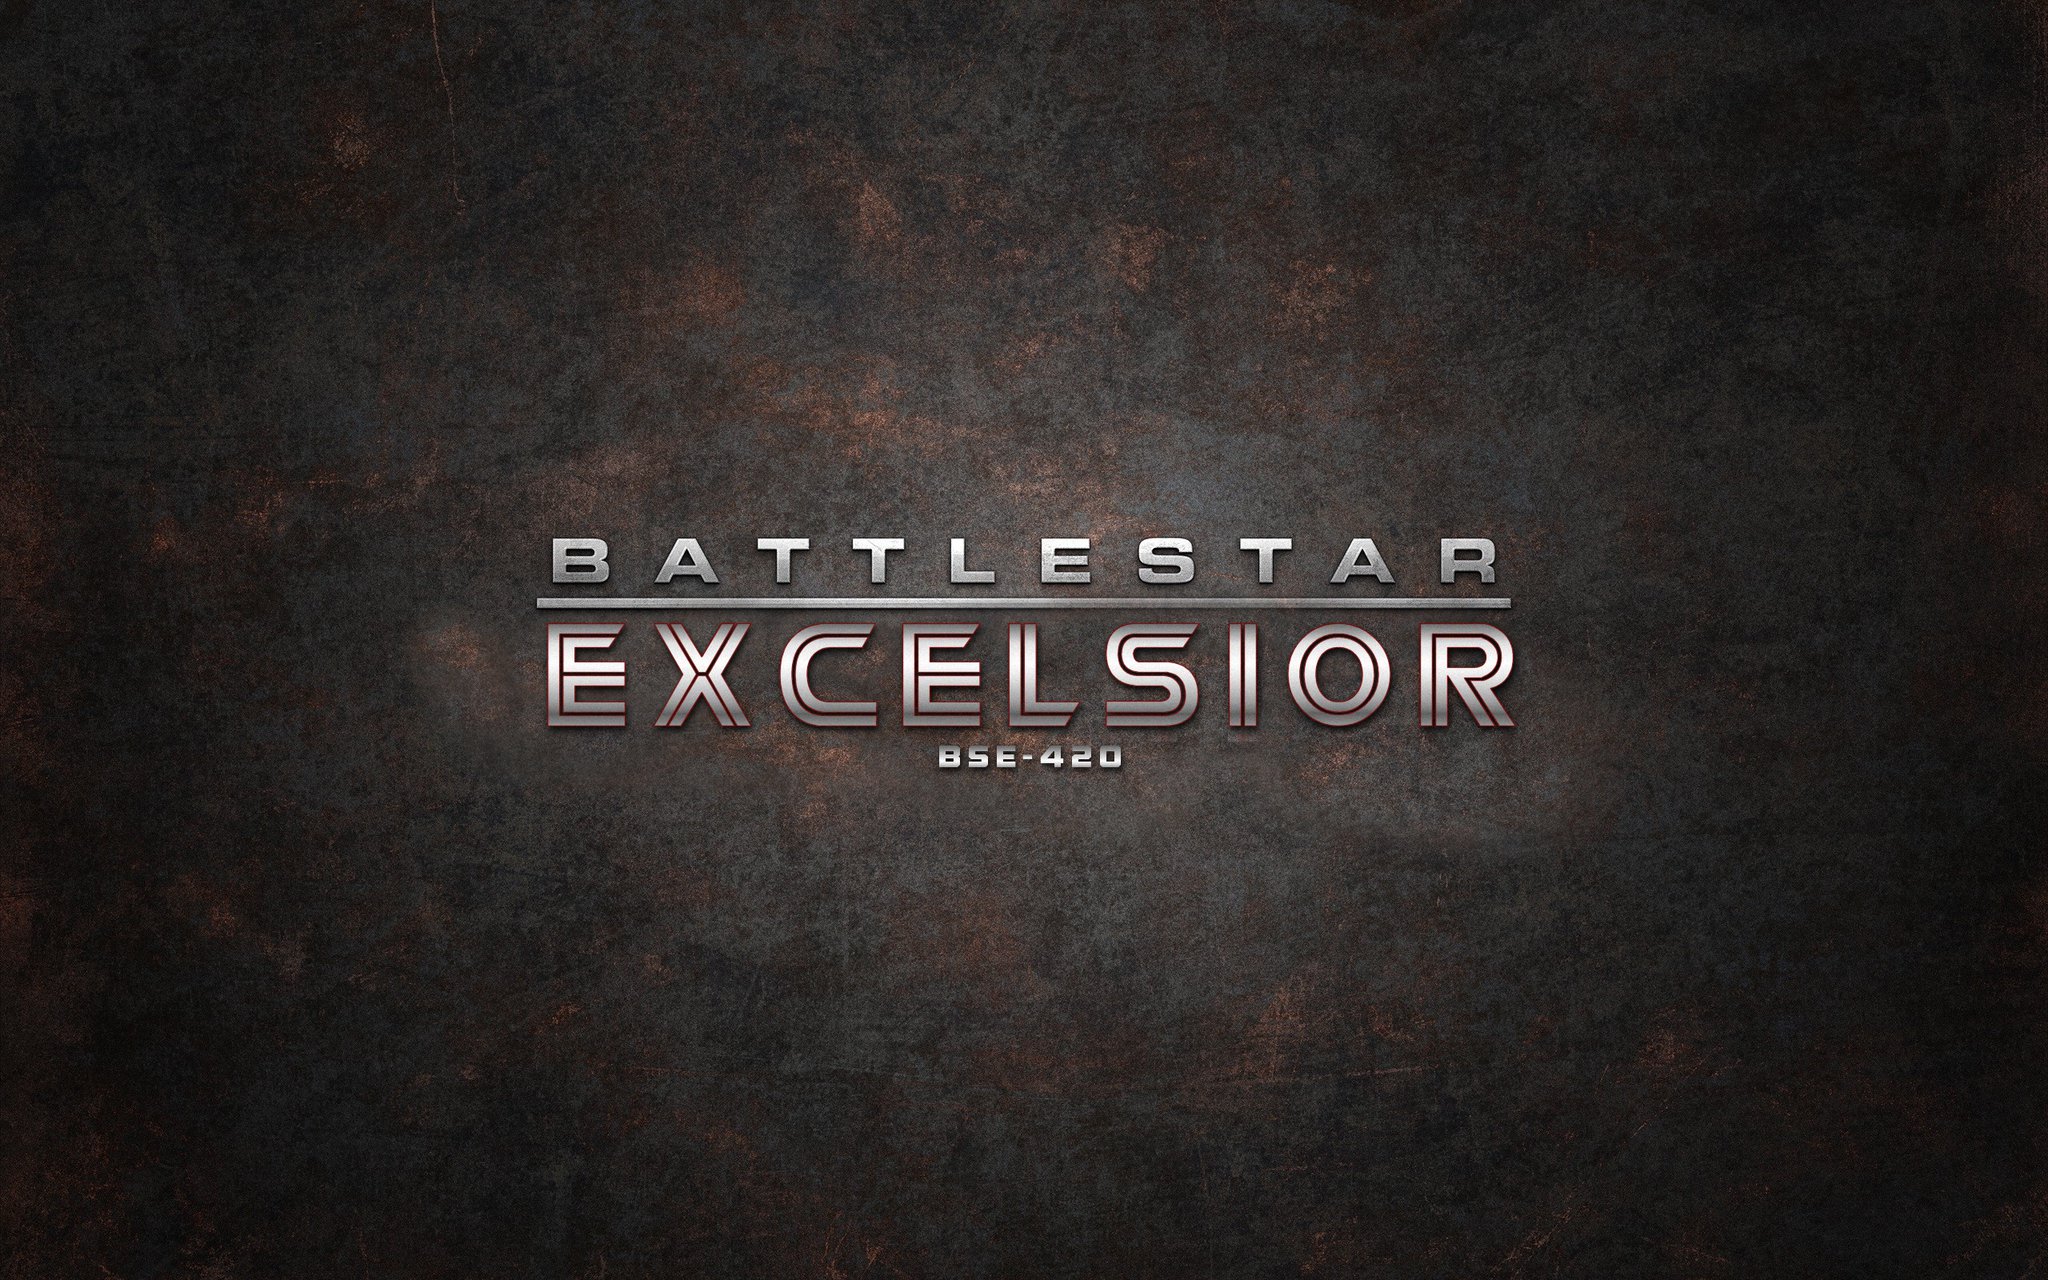 Battlestar Excelsior logo